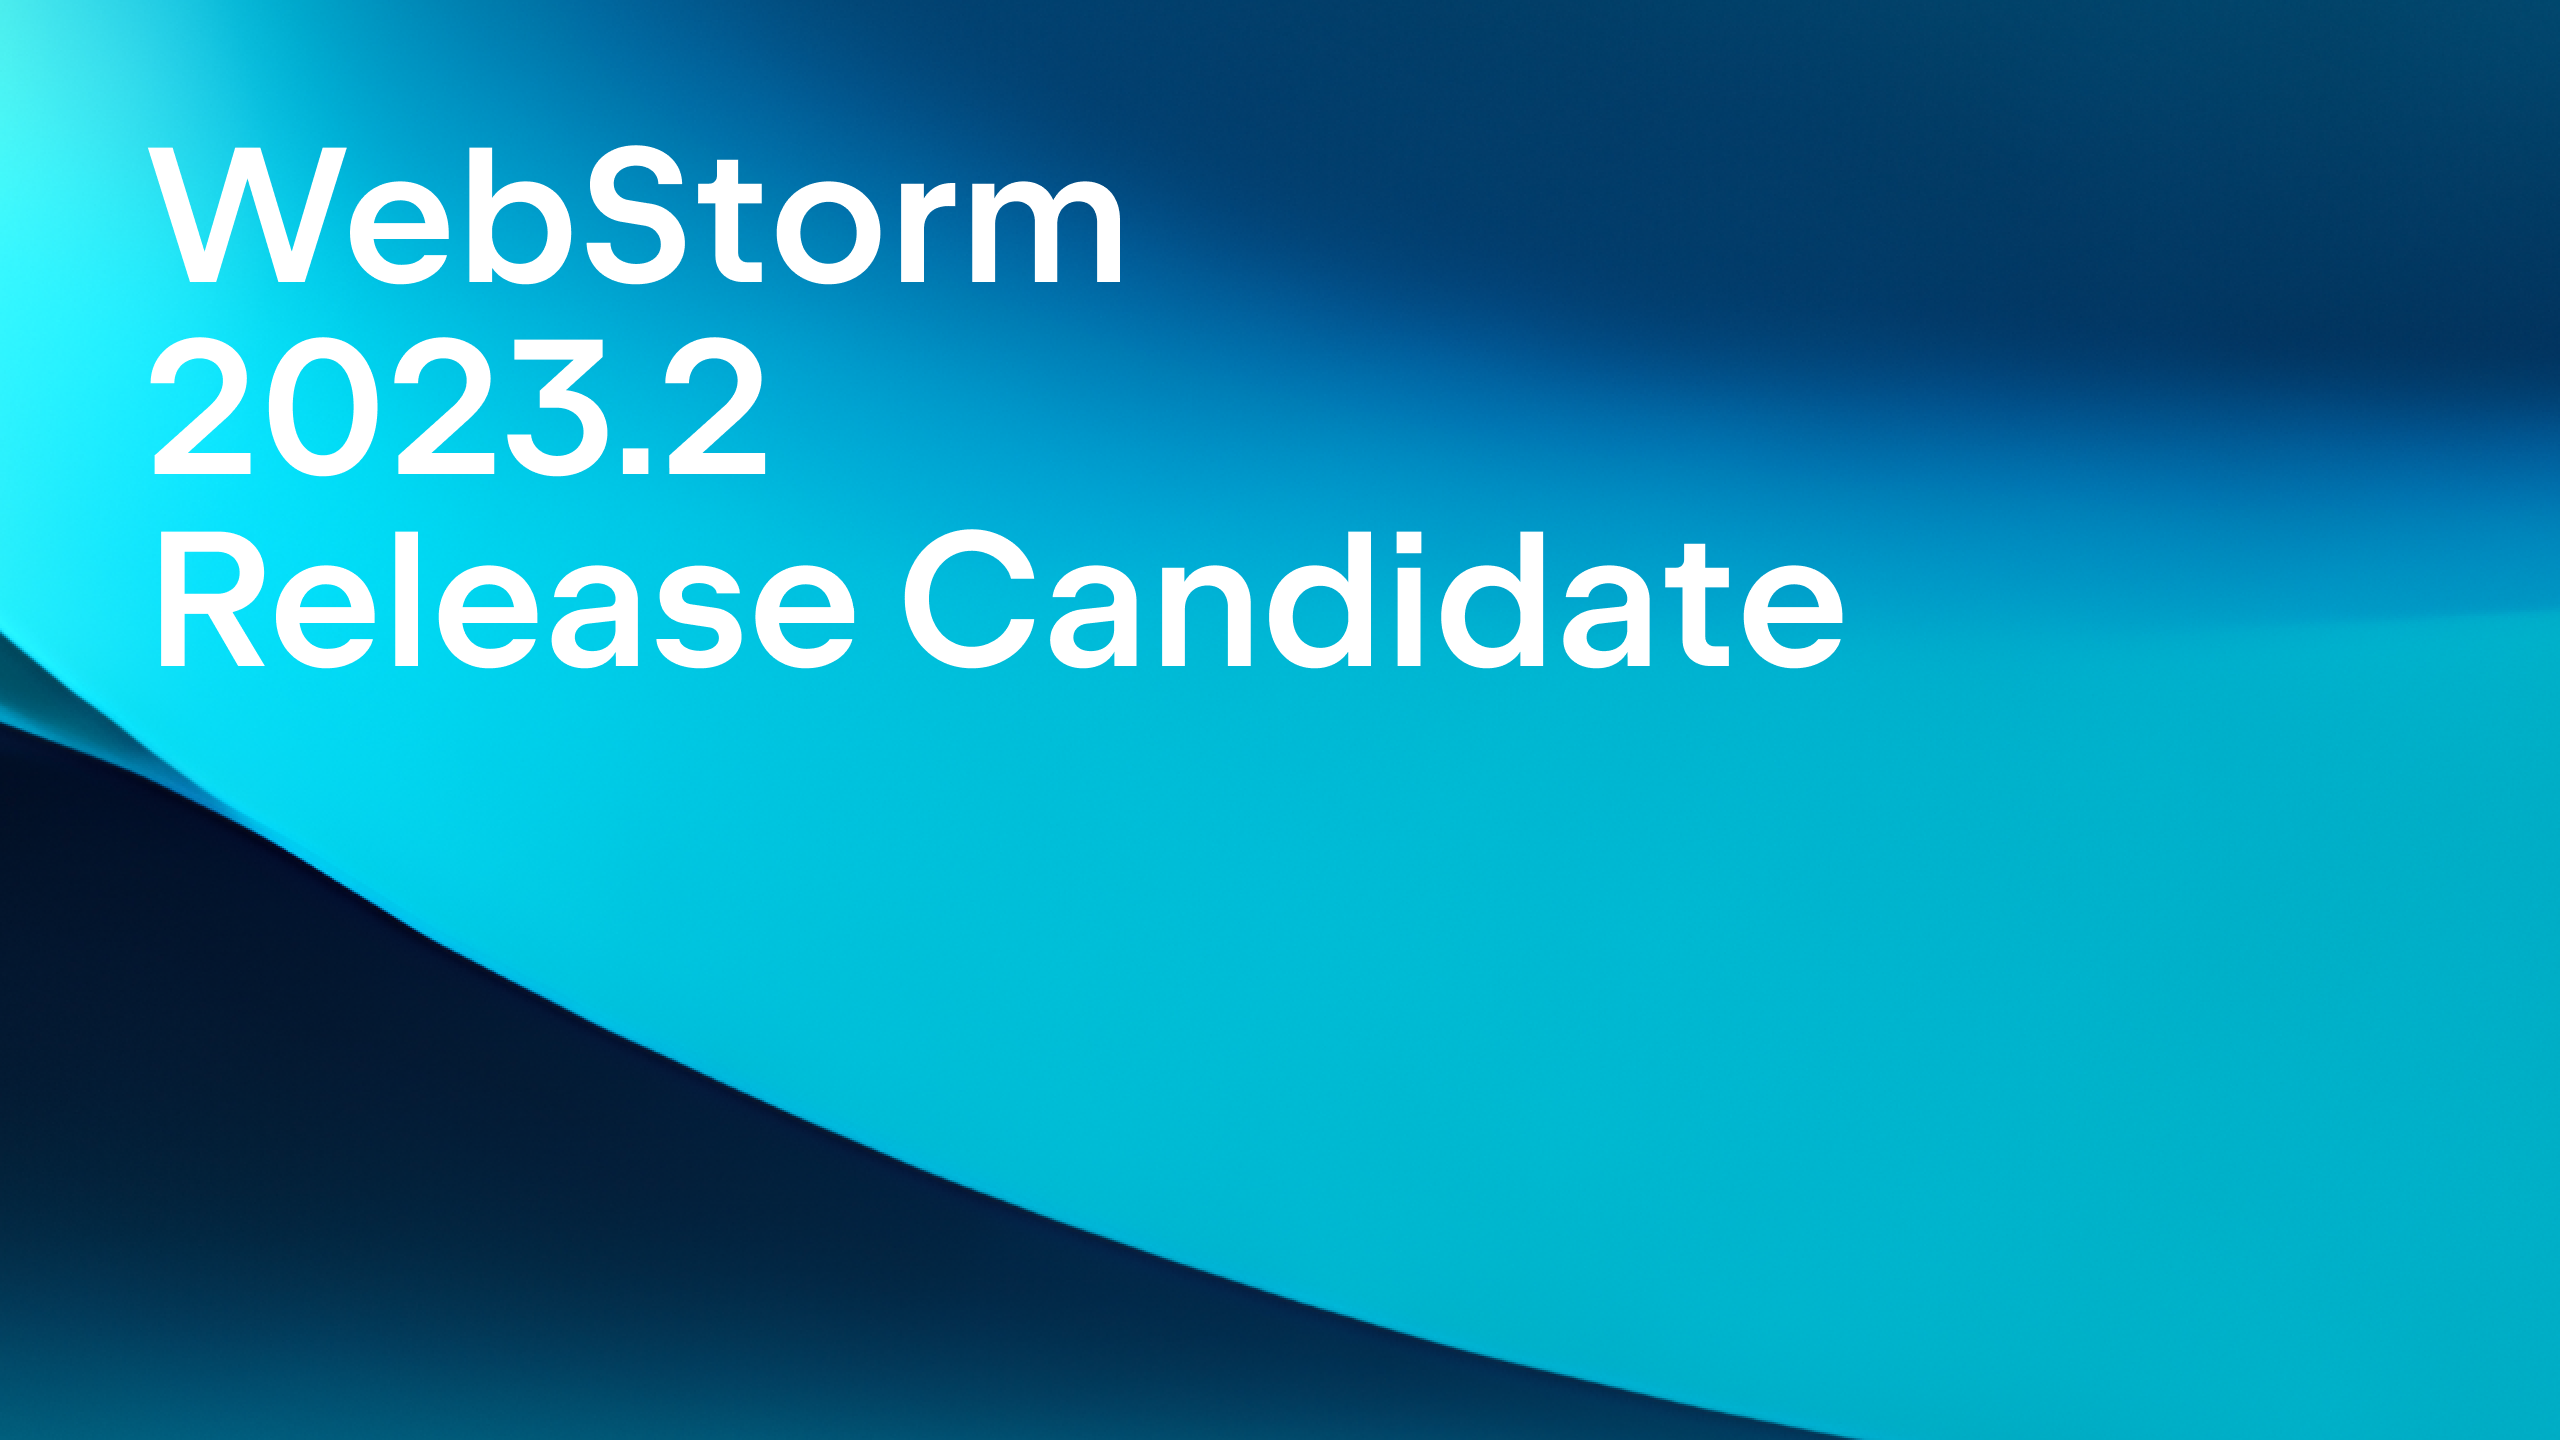 WebStorm 2023.2 Release Candidate banner